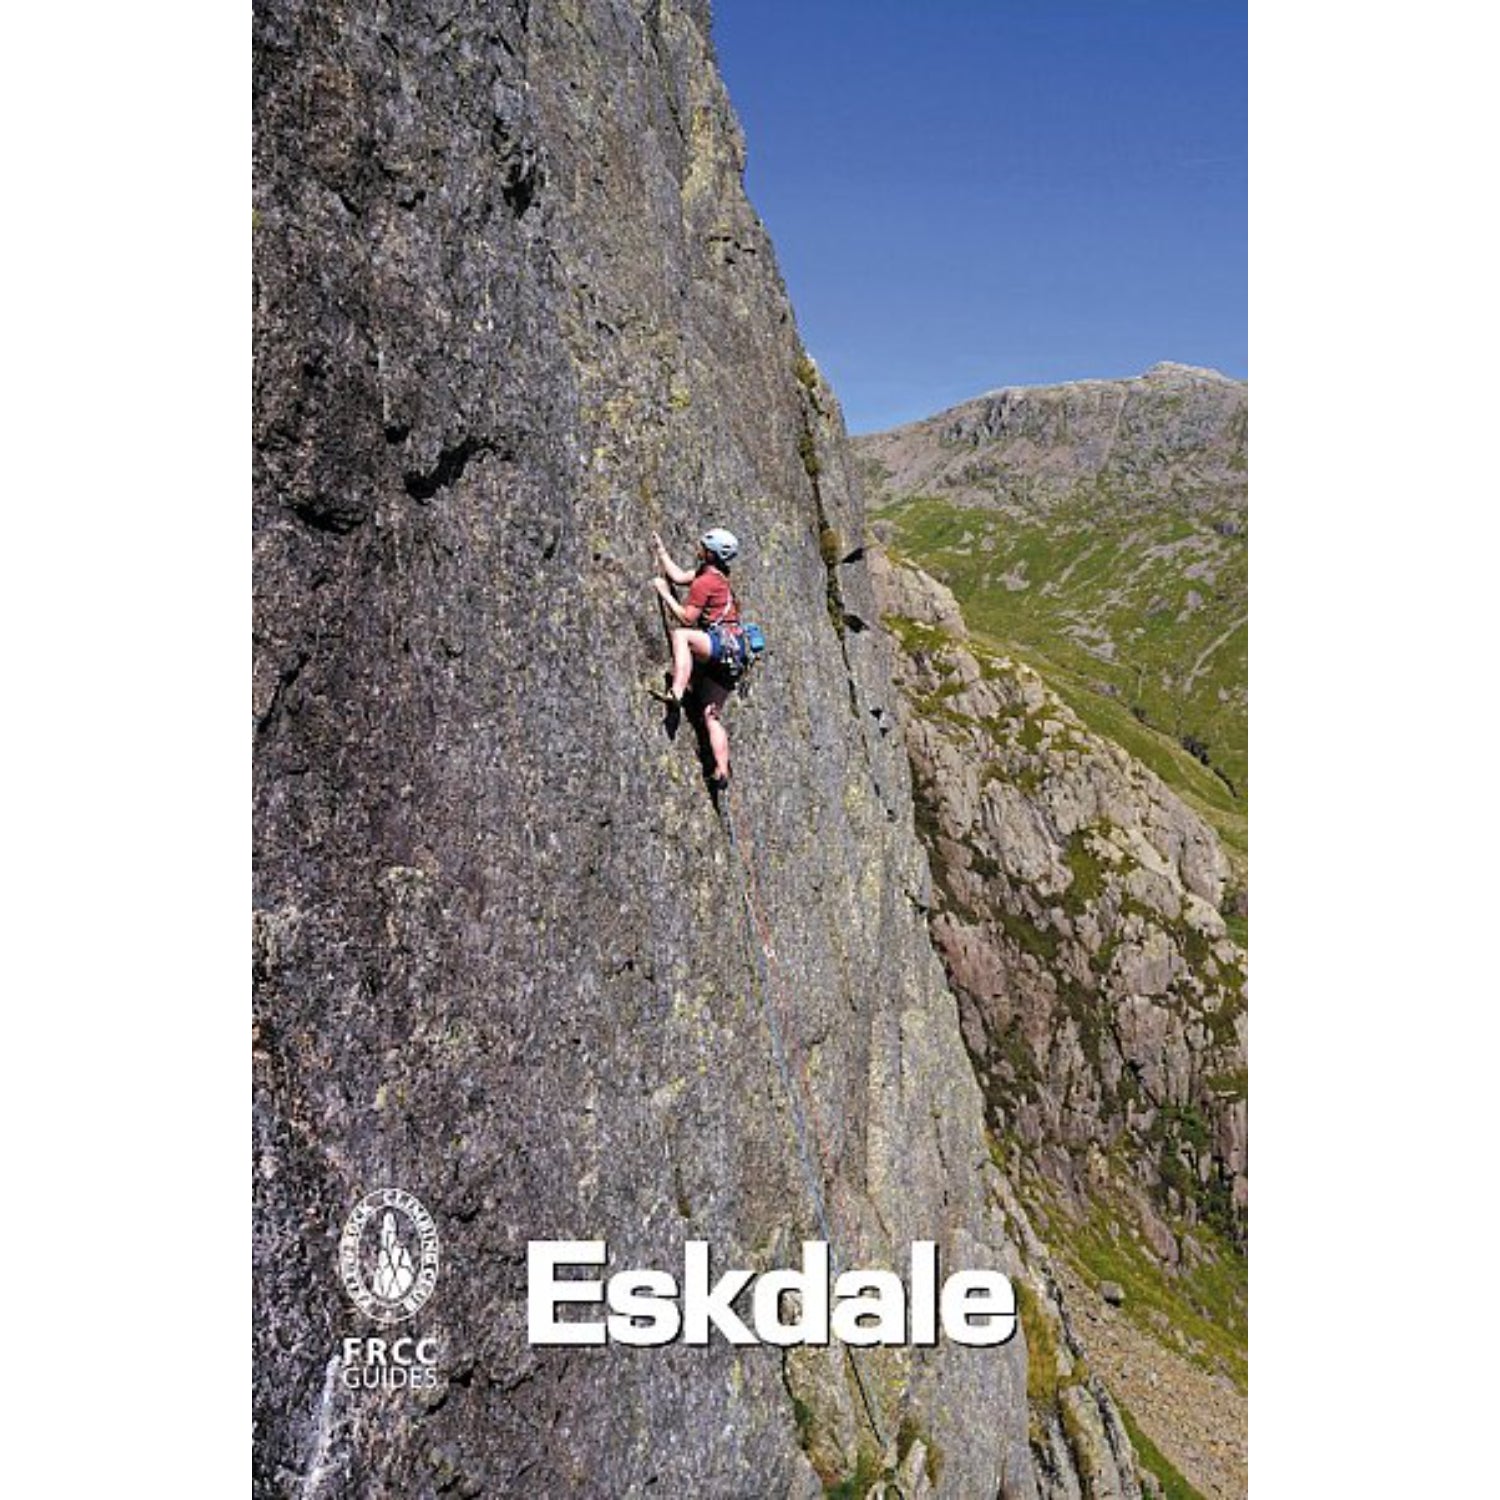 Eskdale (FRCC) climbing guide book